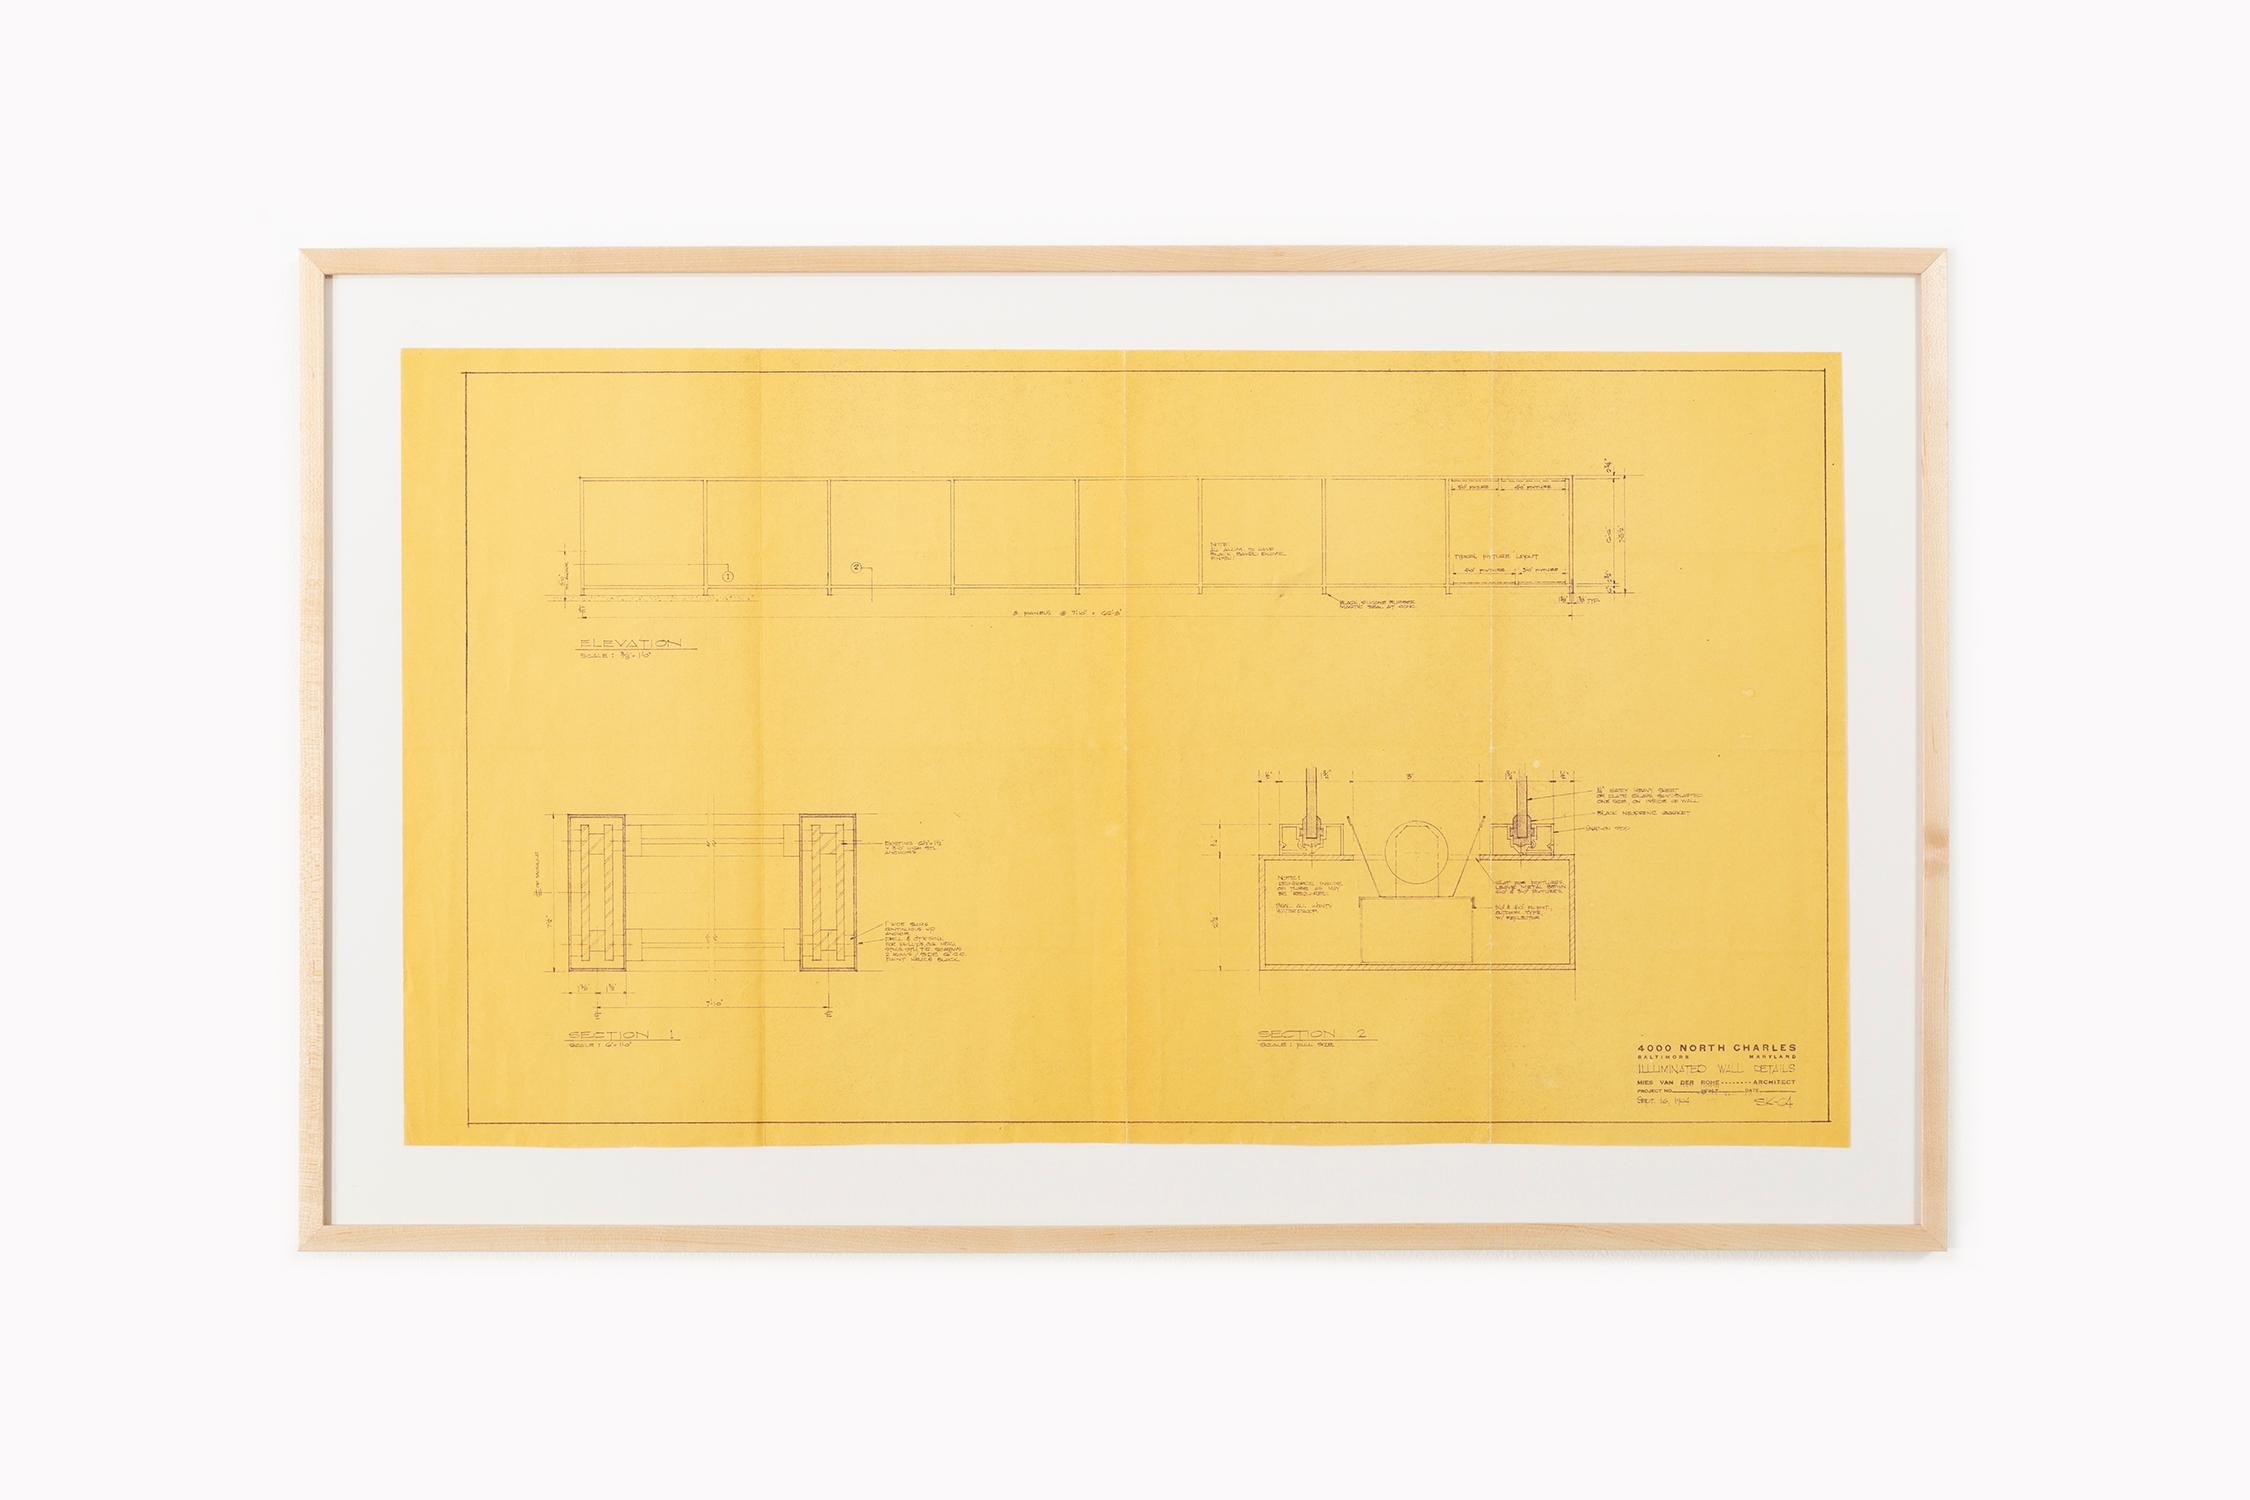 American Original Mies van der Rohe Blueprint, 111 E. Wacker Chicago 1968 P-3 Level Plan For Sale